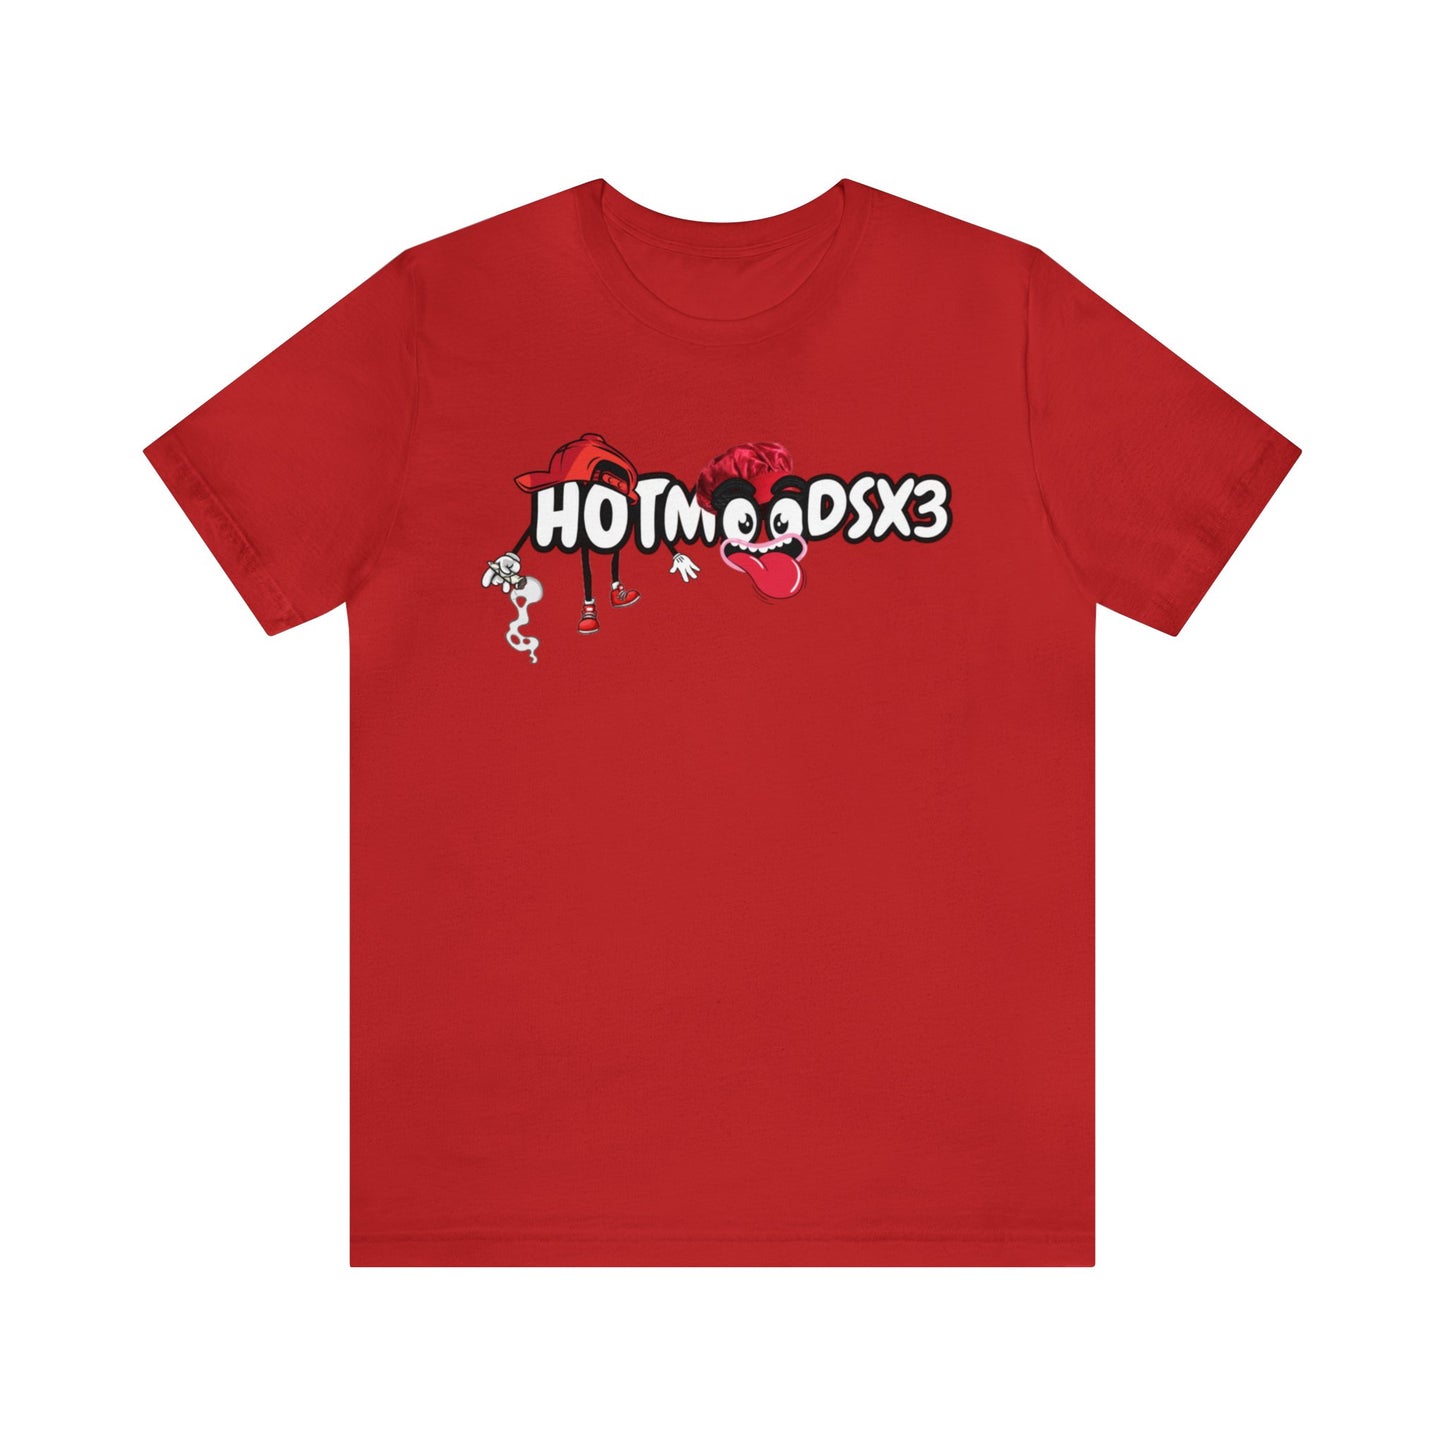 Hotmoodsx3 T- Shirt